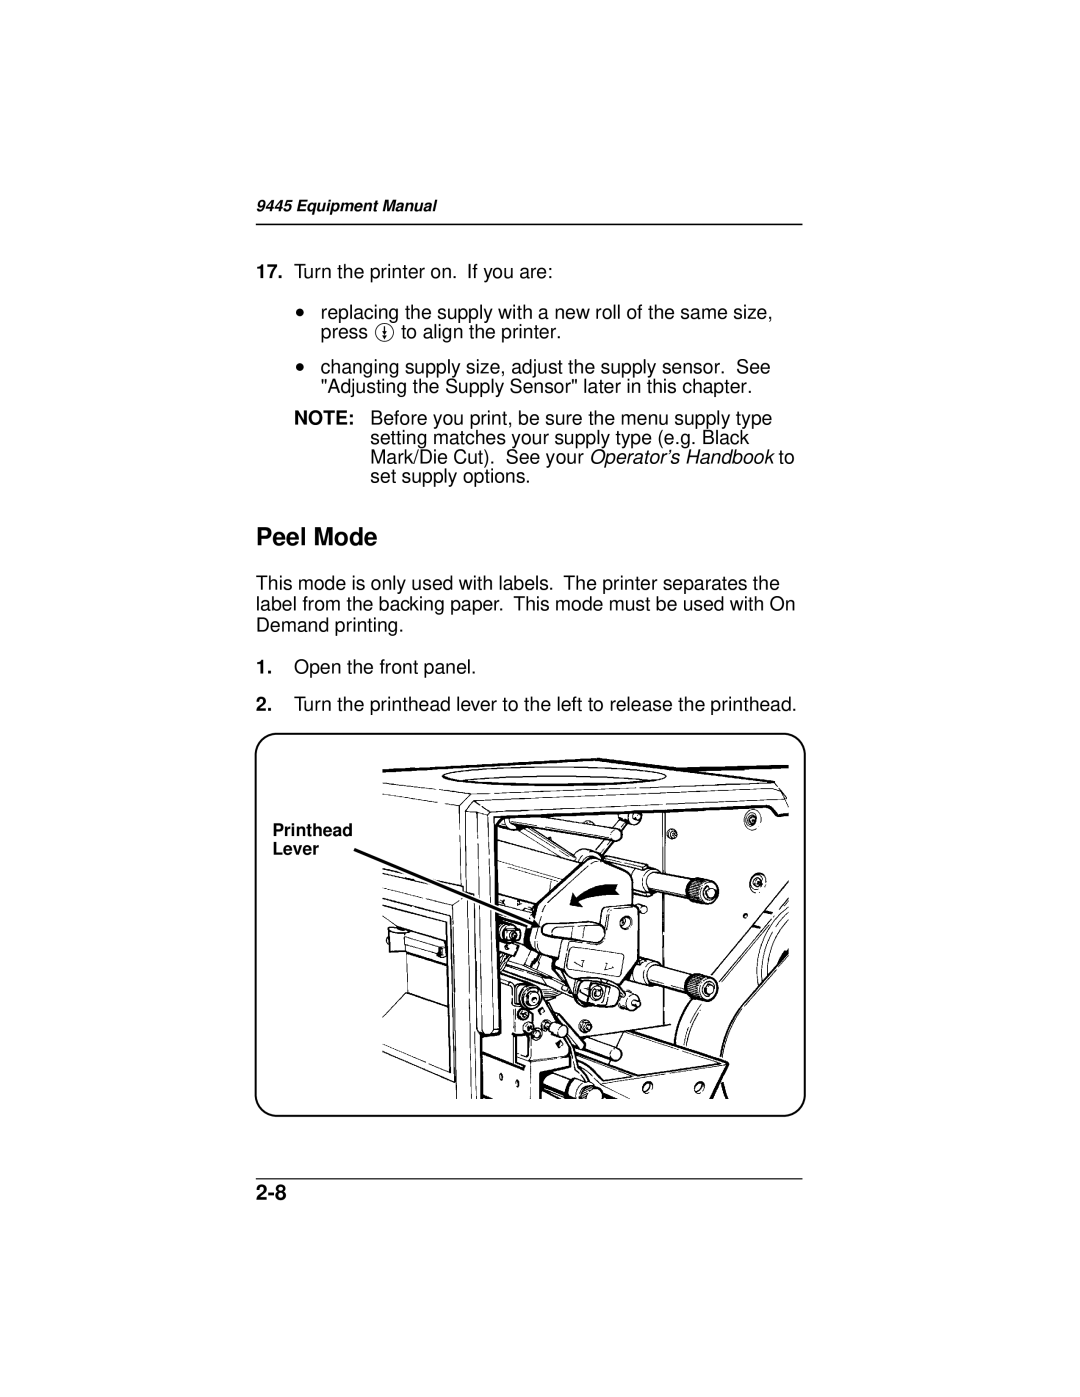 Paxar 9445 manual Peel Mode, Printhead Lever 